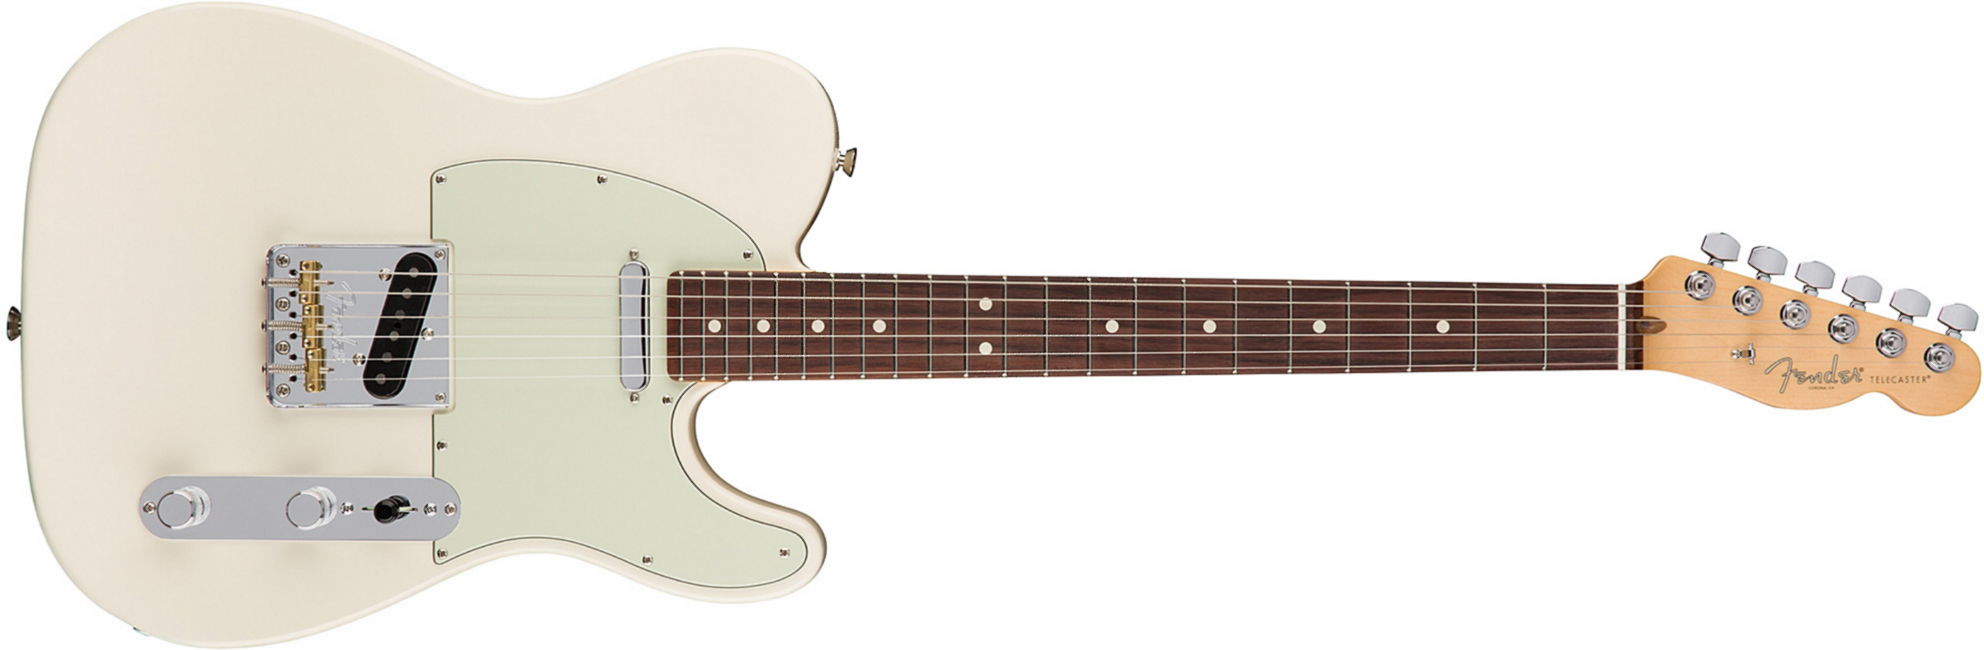 Fender Tele American Professional 2s Usa Rw - Olympic White - Guitarra eléctrica con forma de tel - Main picture